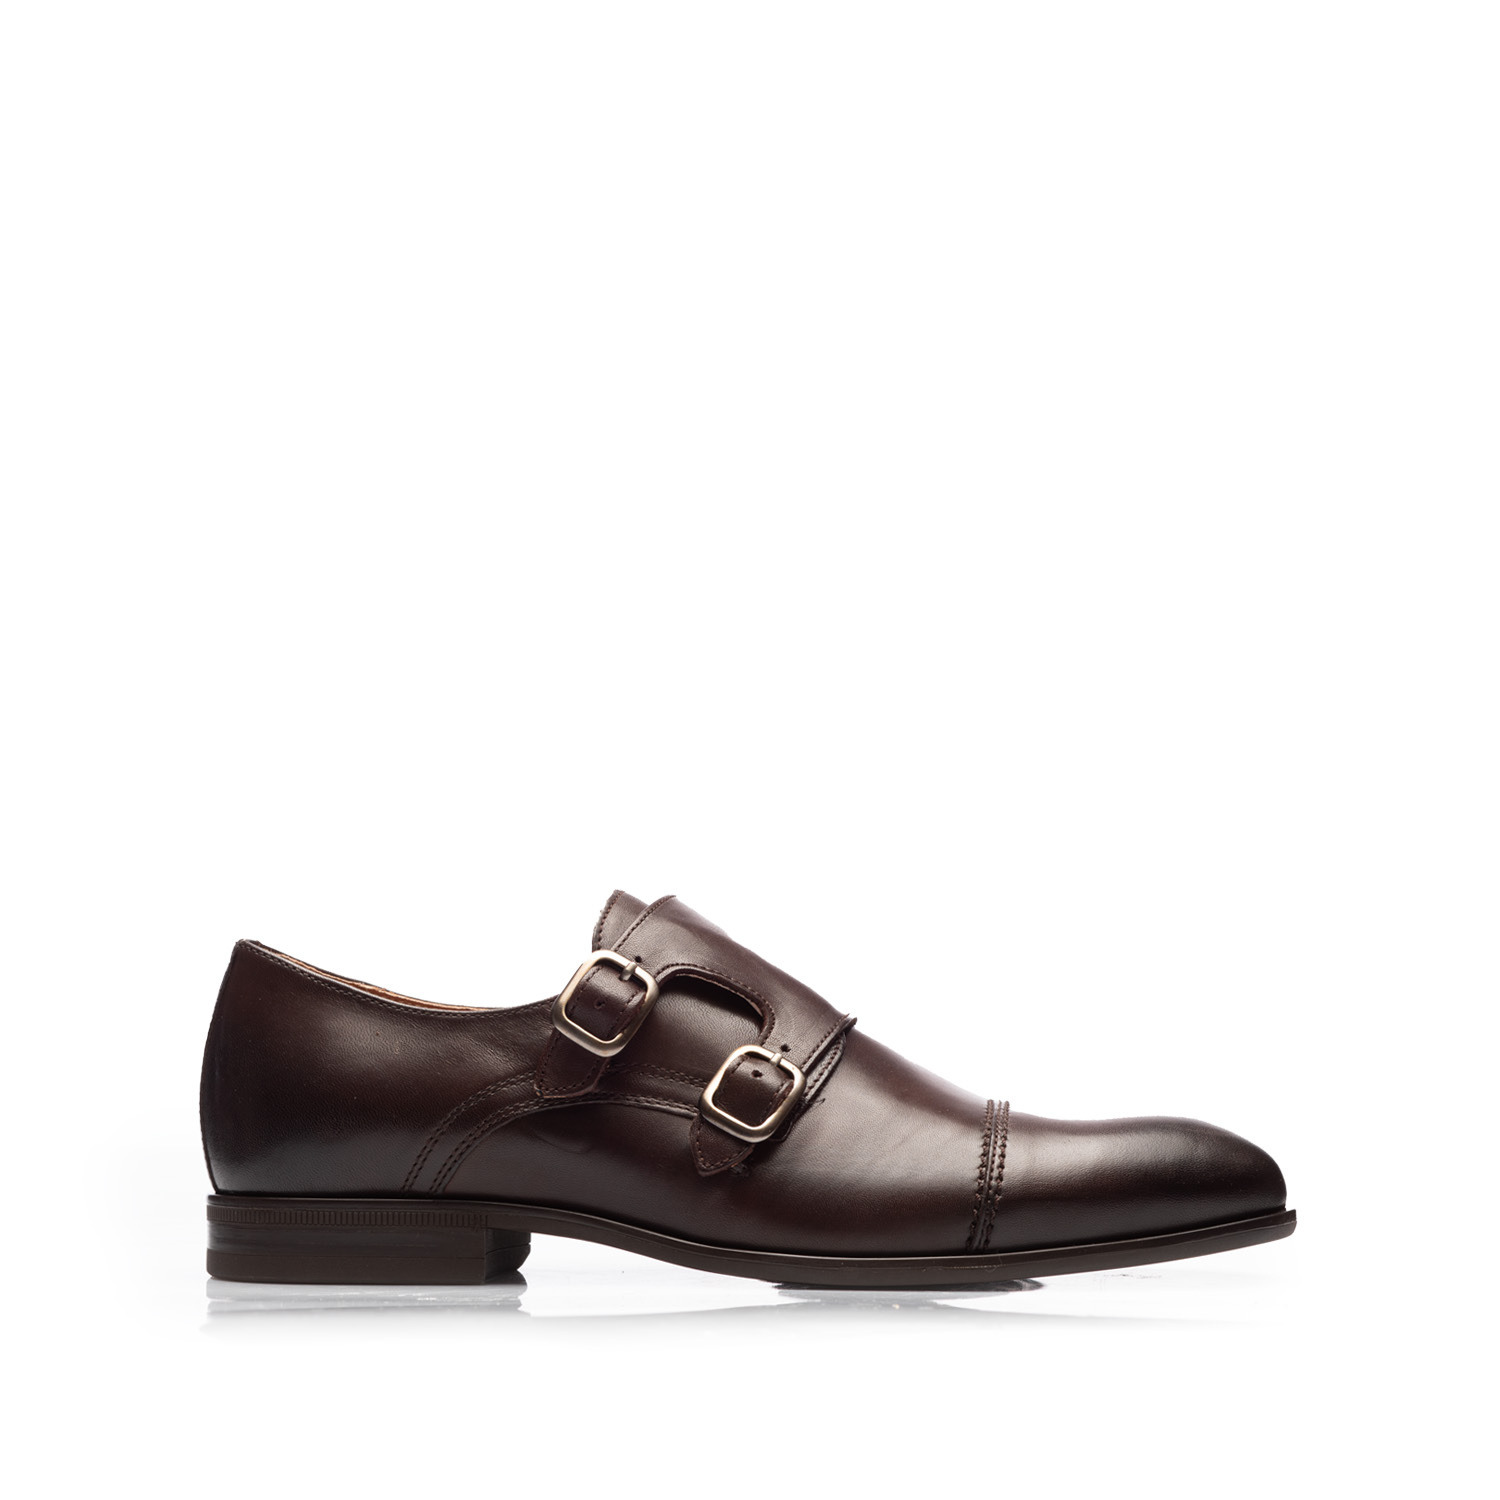 Pantofi eleganti barbati din piele naturala cu catarame,Leofex - 933 Mogano box